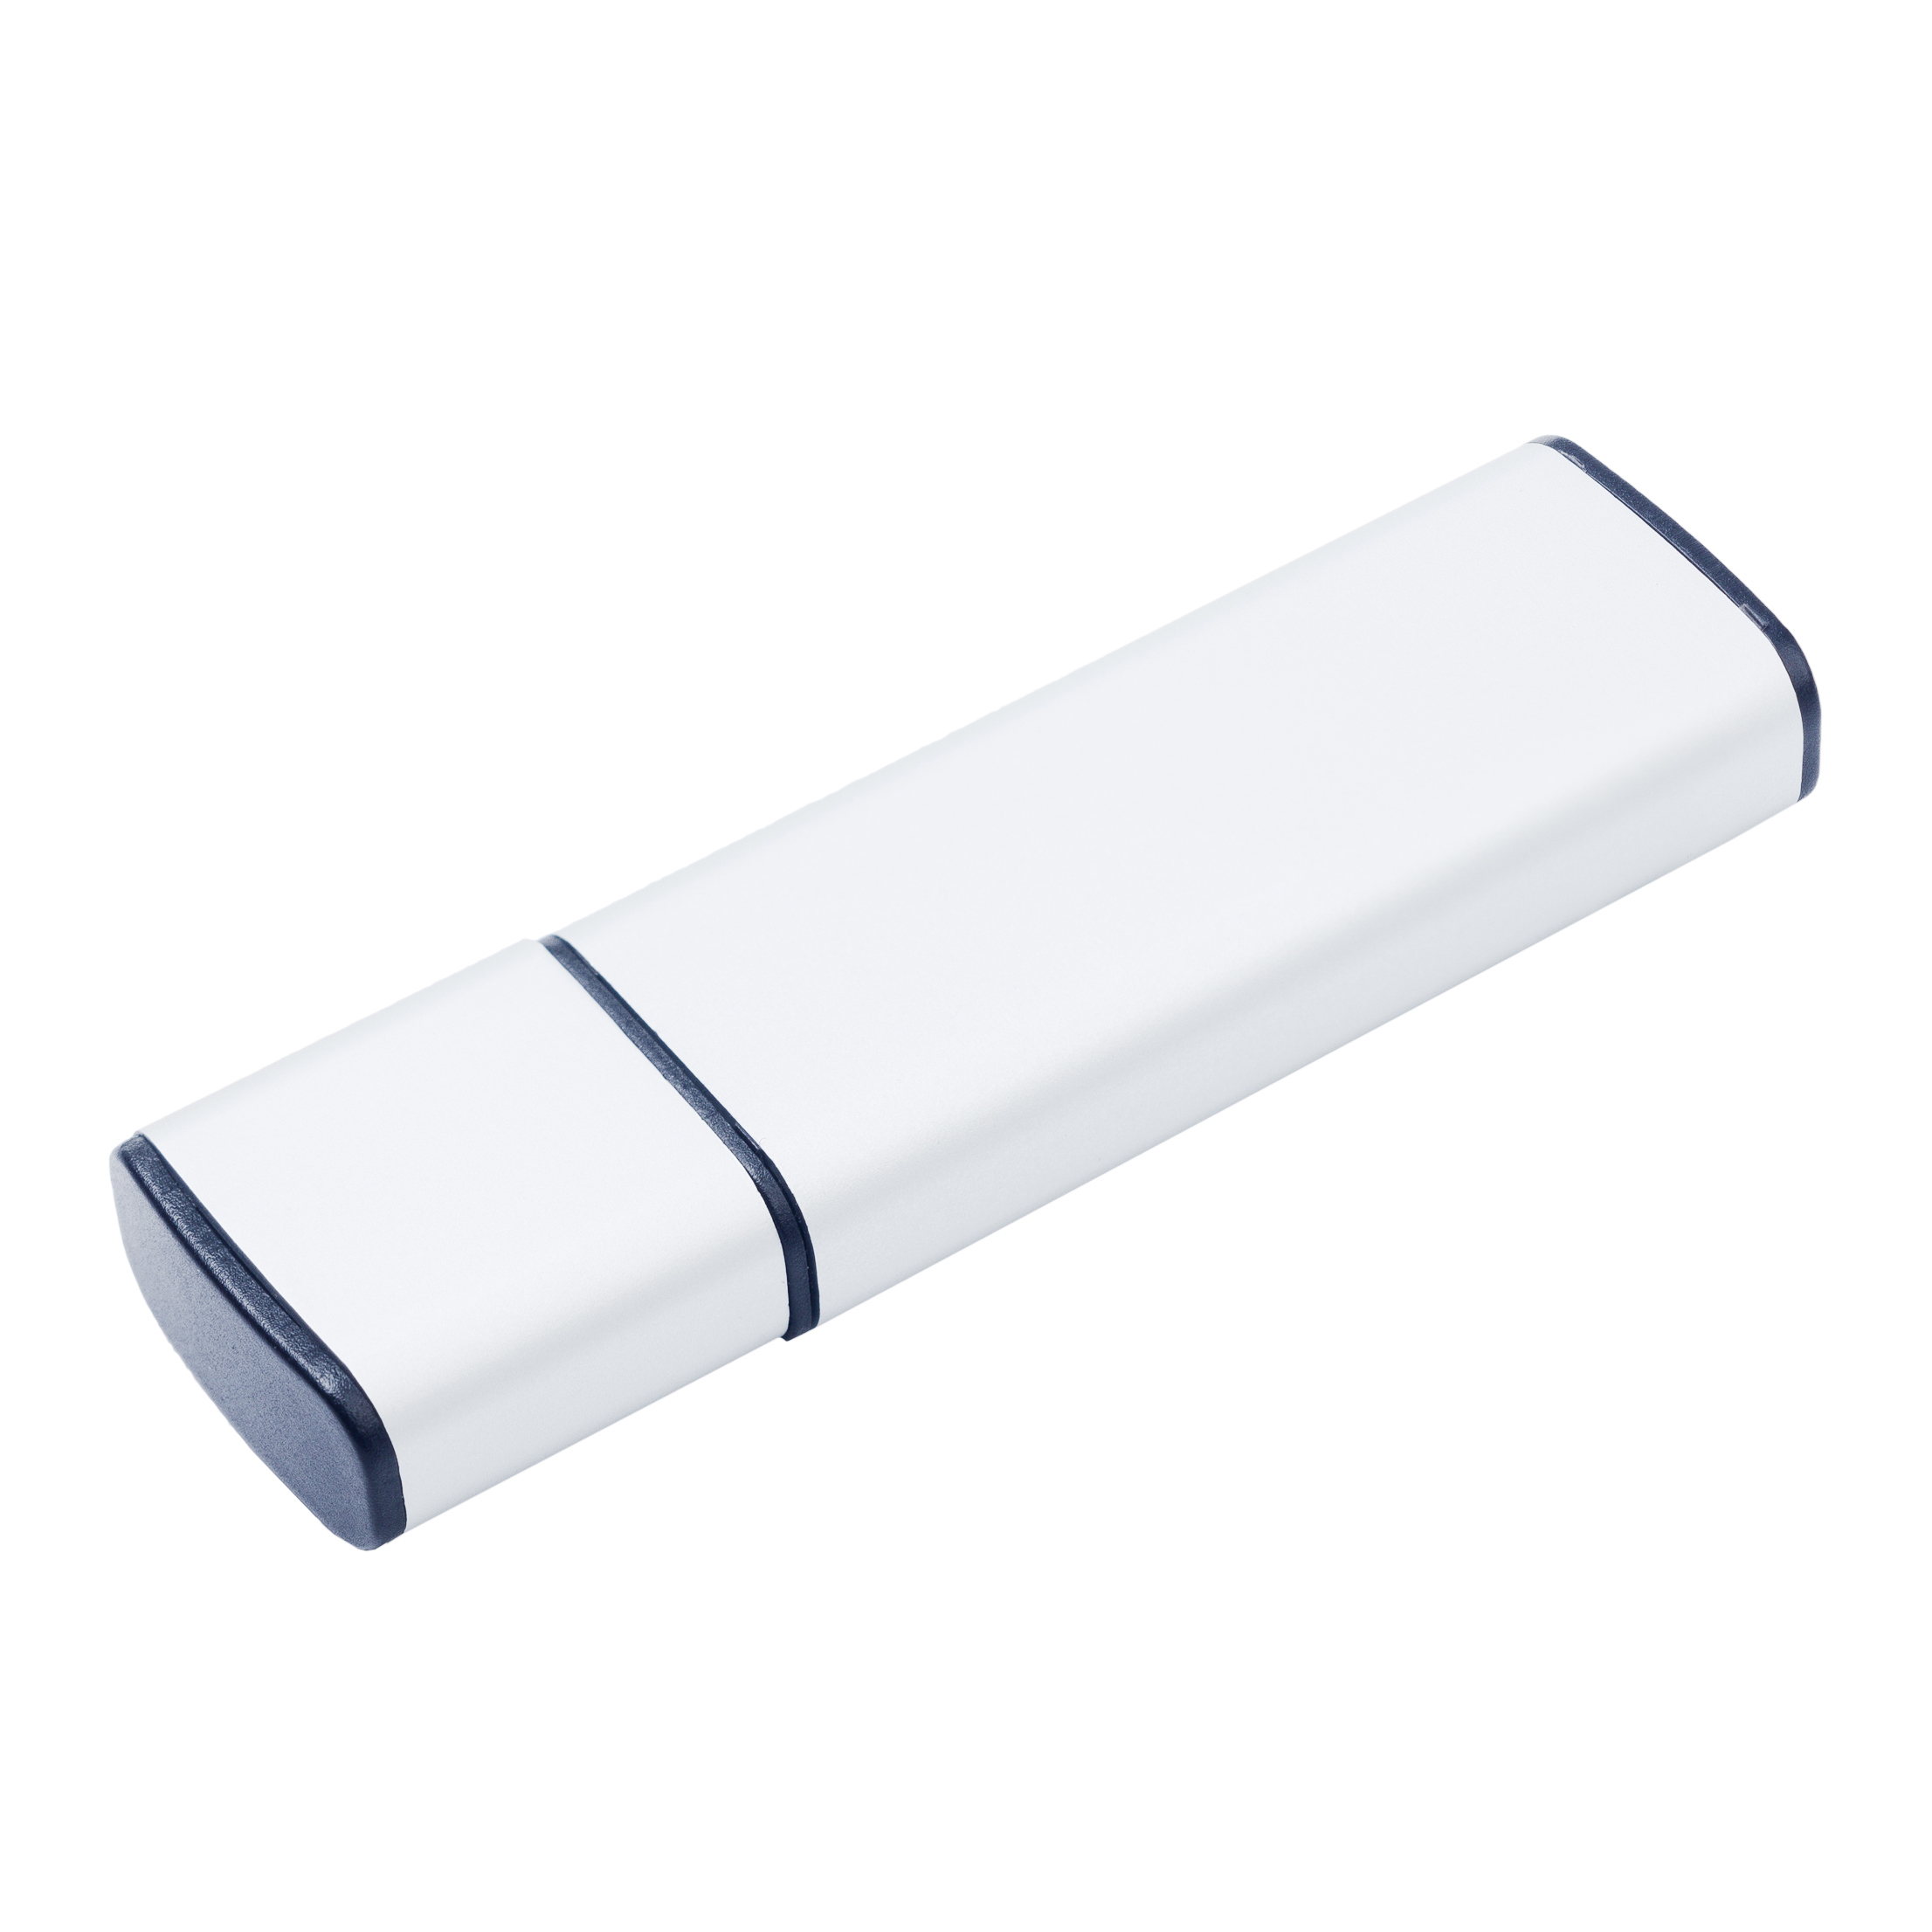 USB-флешка модель 122, (USB 3.0), объем памяти 64 GB, цвет белый